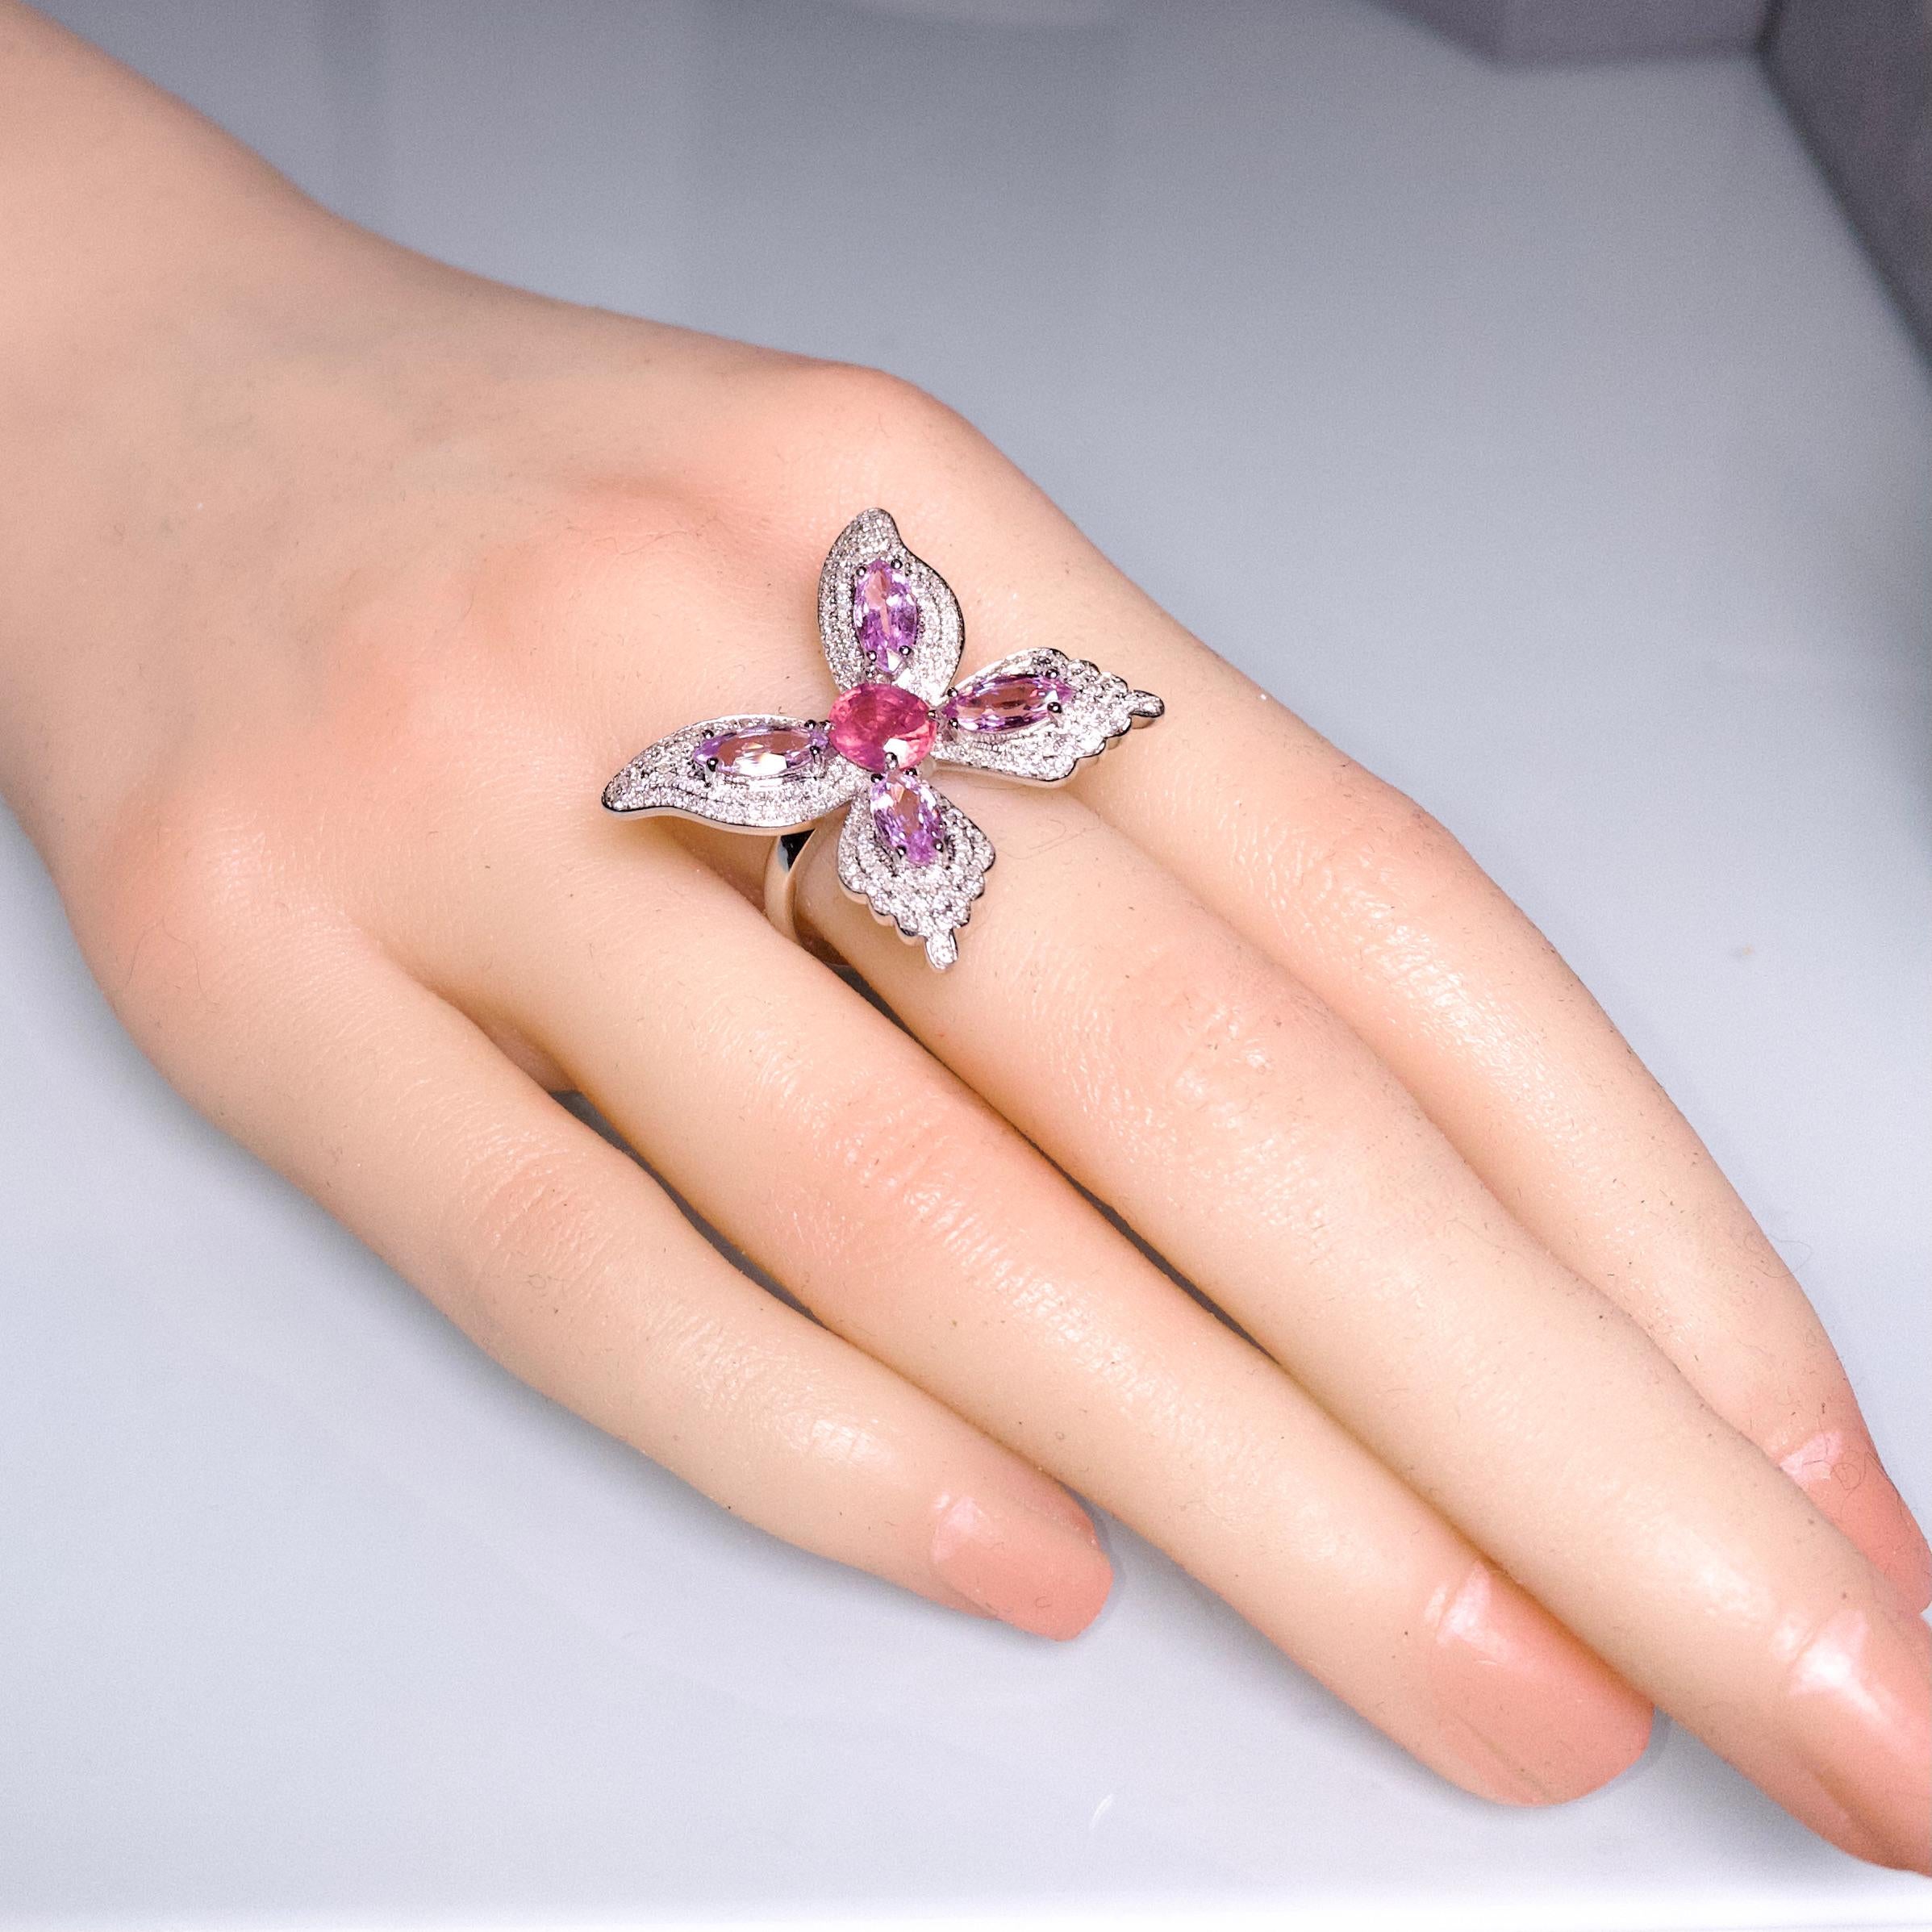 Brilliant Cut 1.2 Ct Pinkish Orange Sapphire, Pink Sapphire and Diamond Ring in 18k White Gold